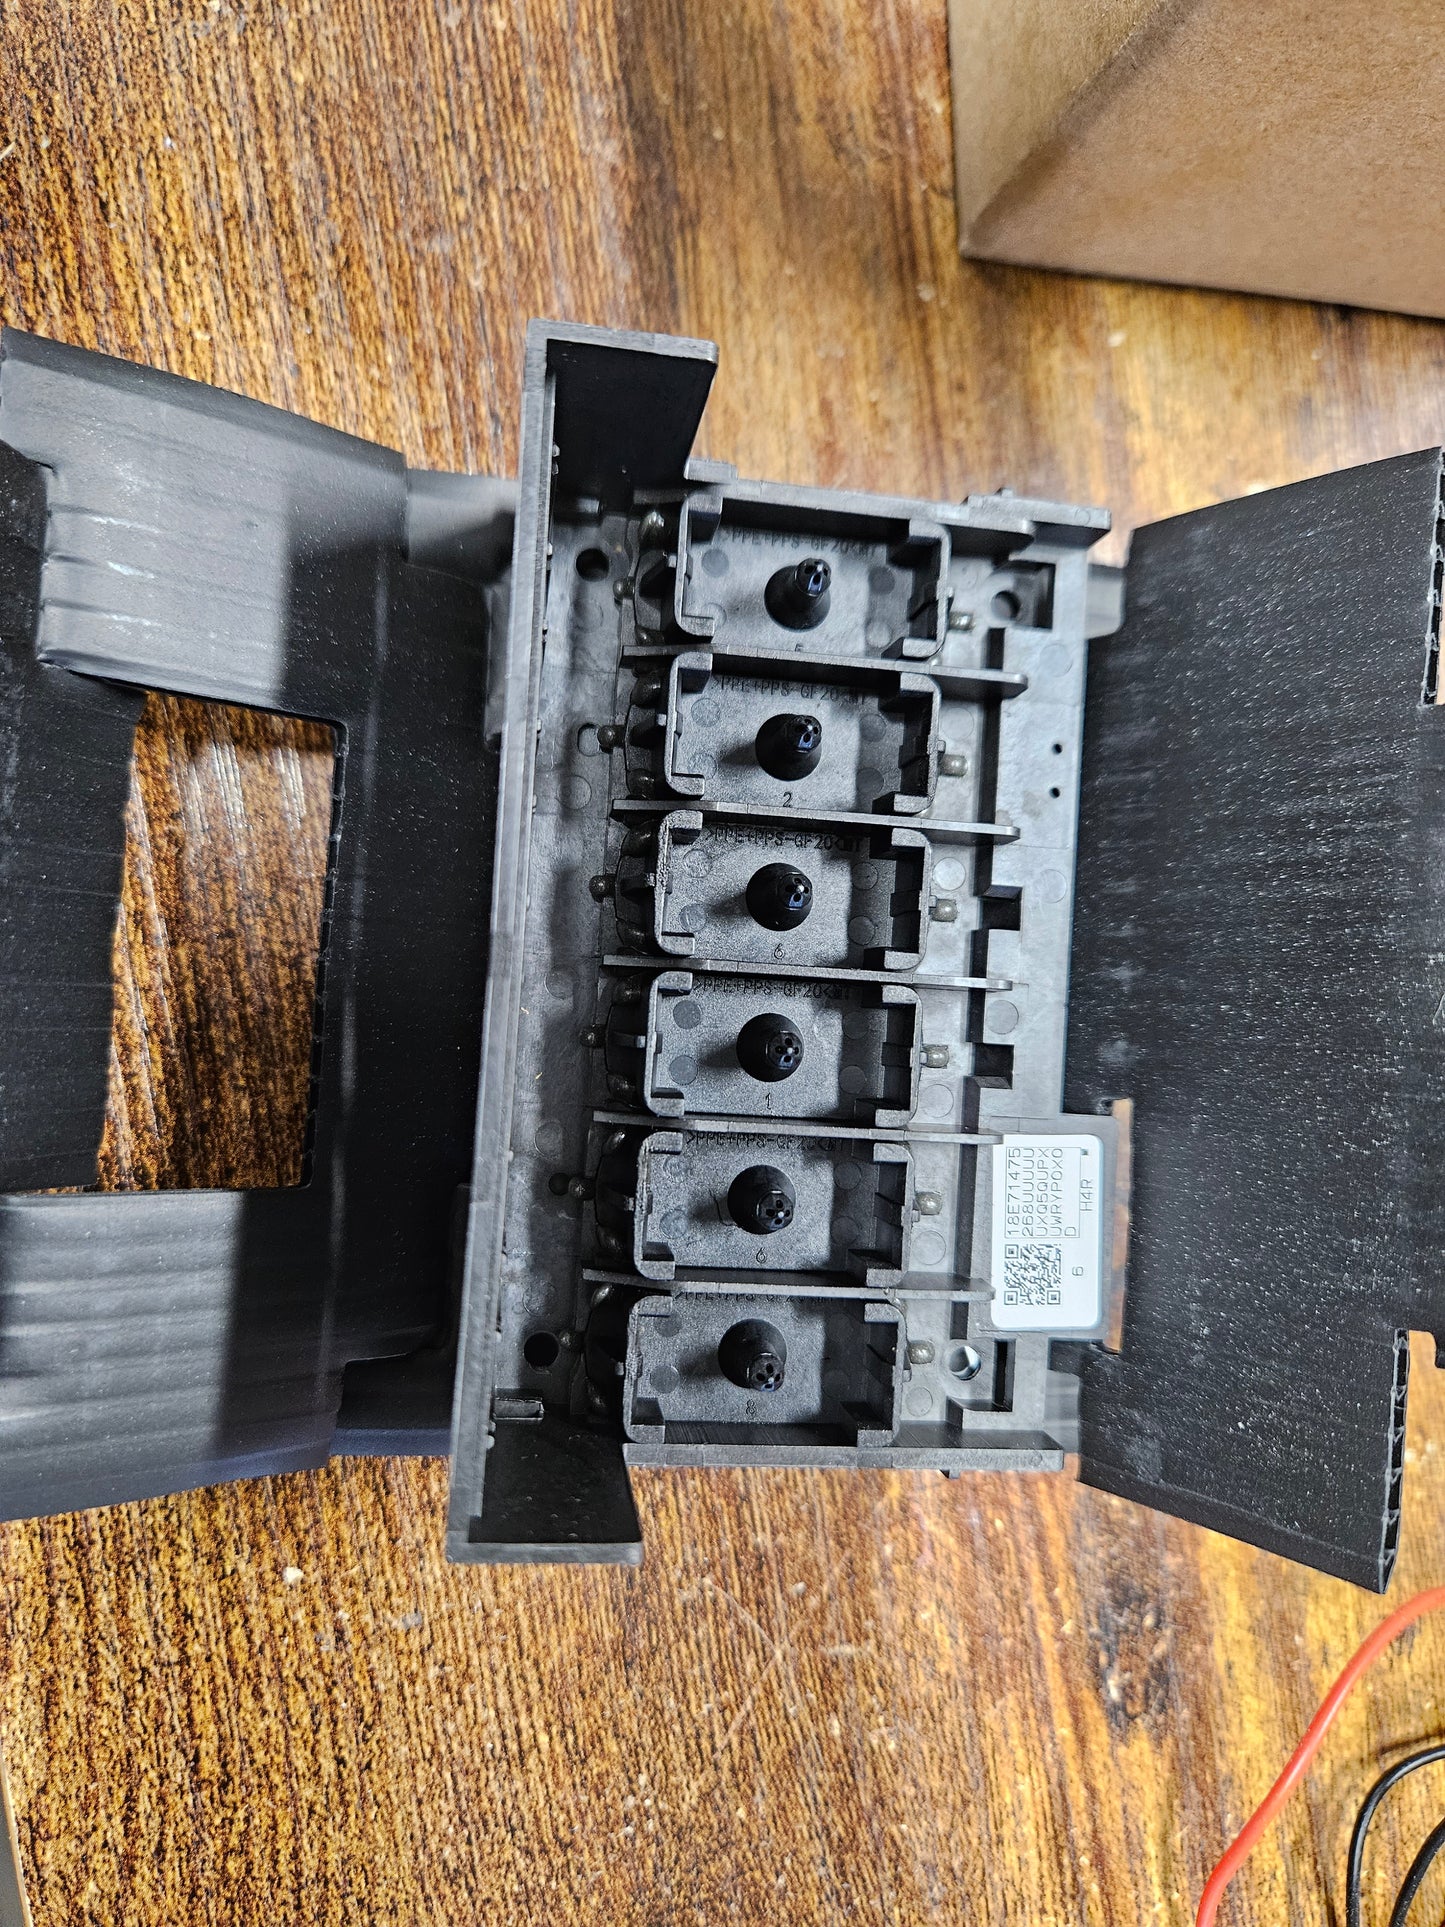 Replacement Epson xp600 printhead fits refine color printers